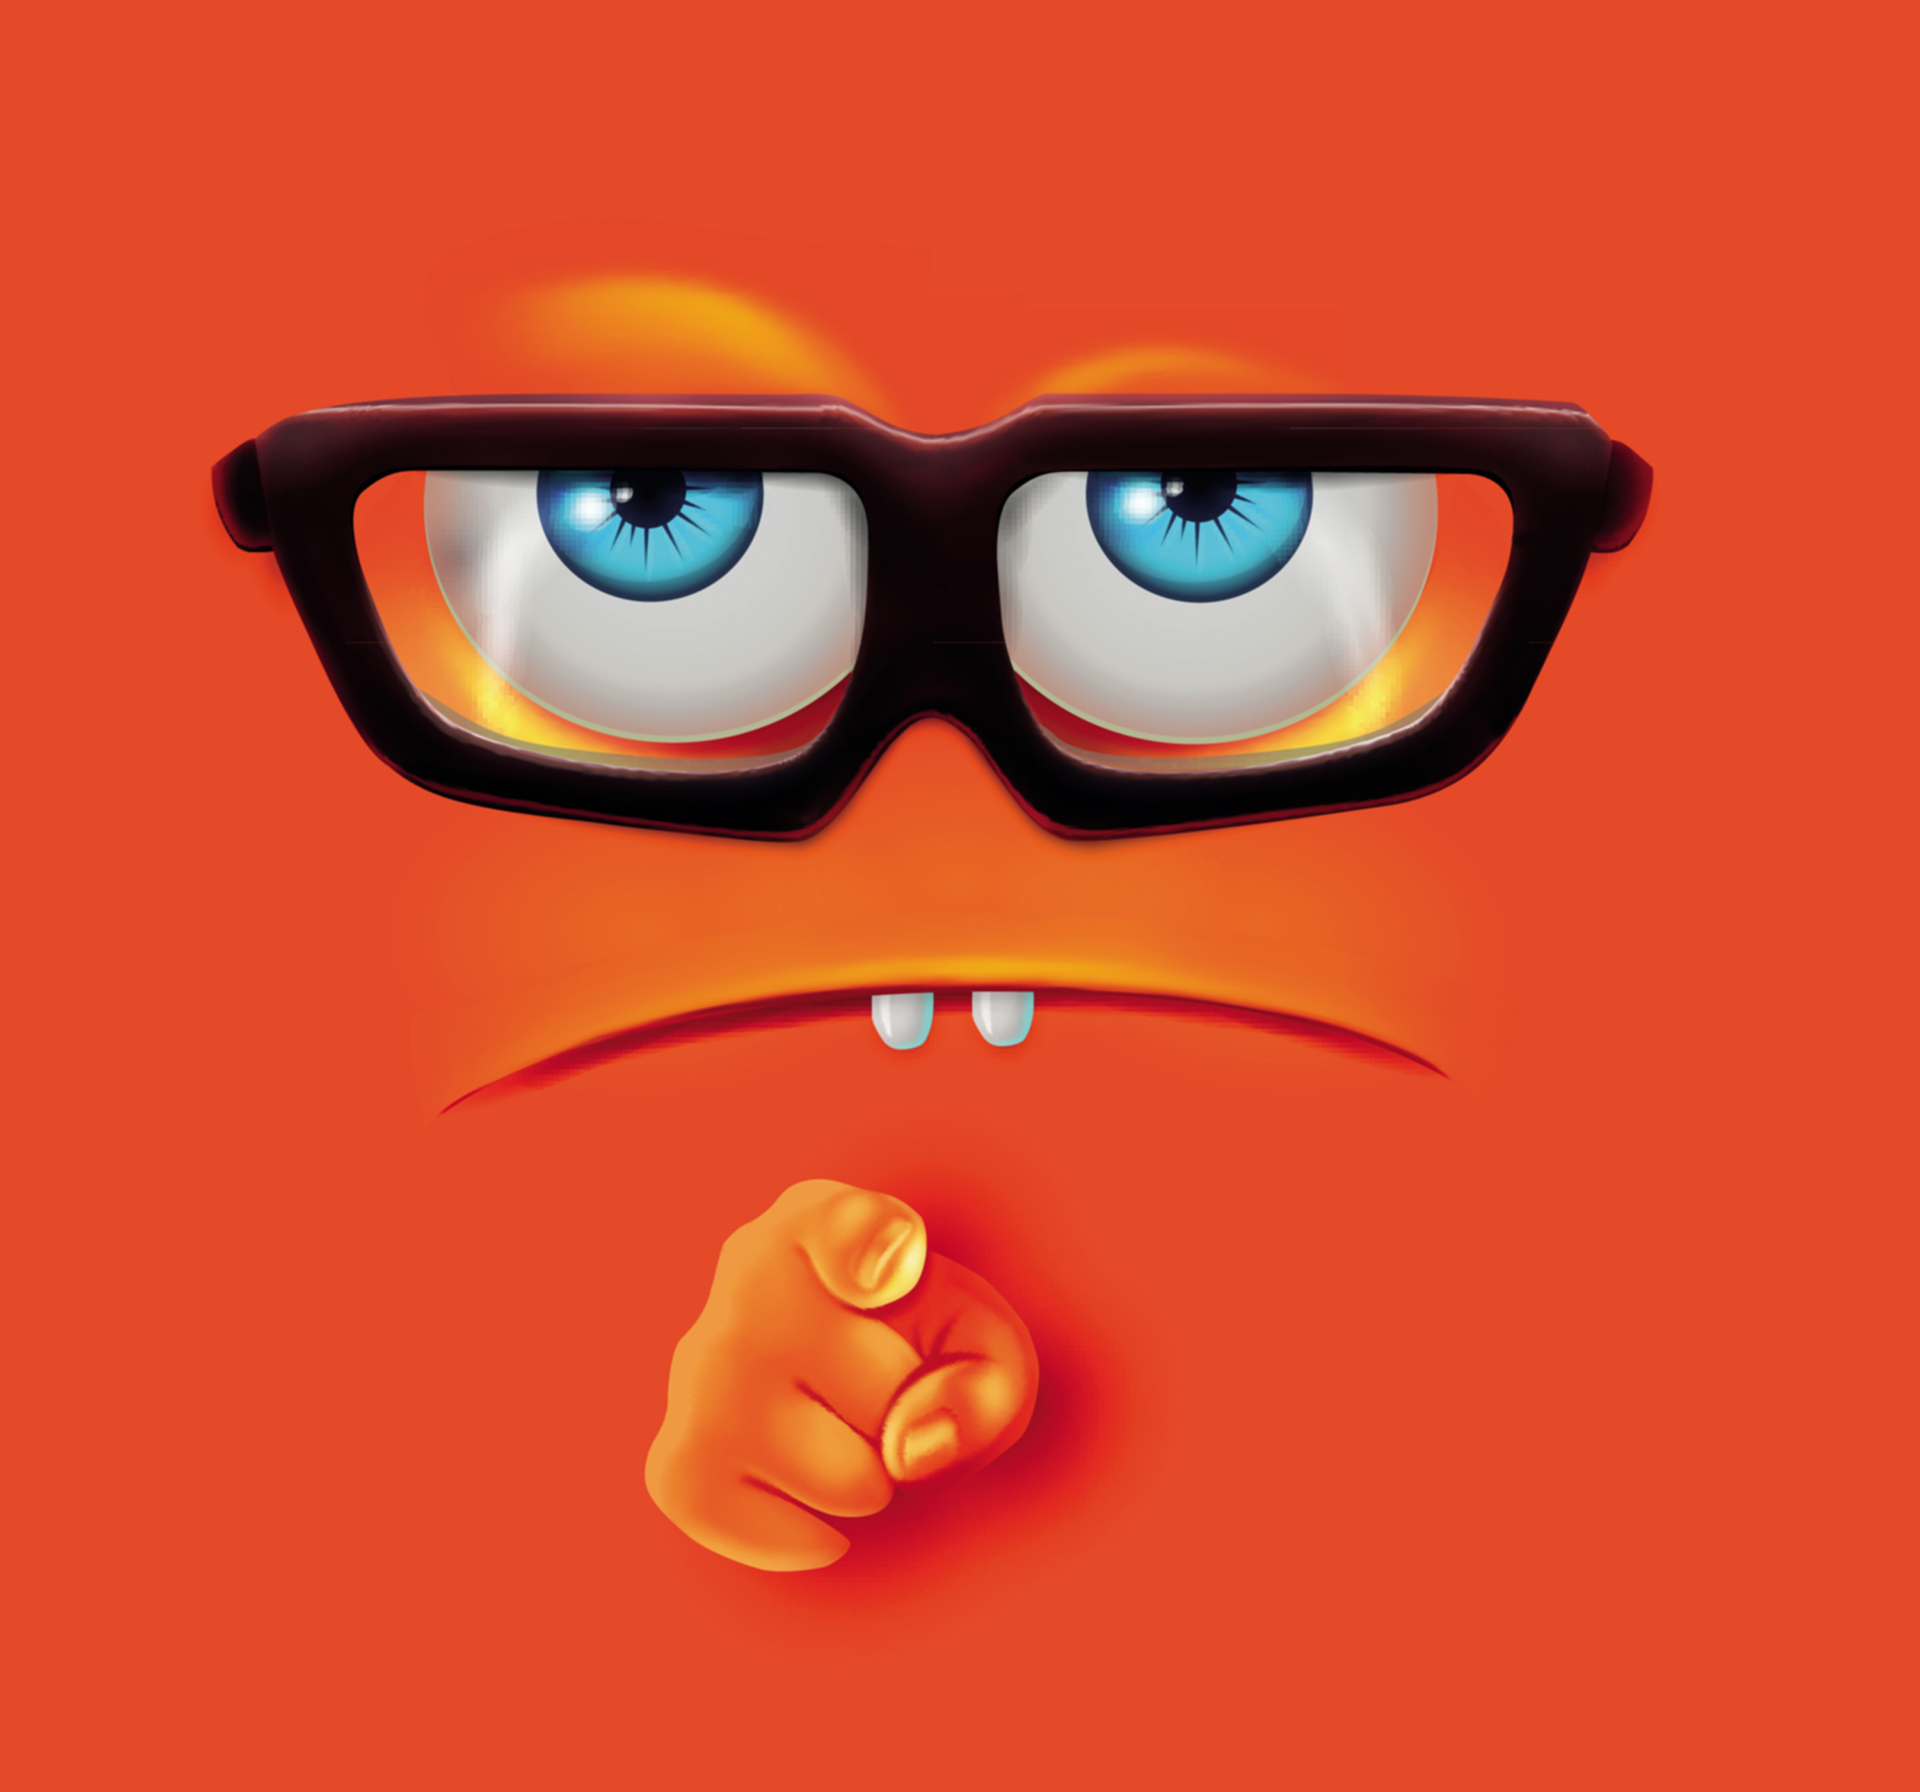 90 Funny Faces ideas  funny faces emoji wallpaper funny iphone wallpaper